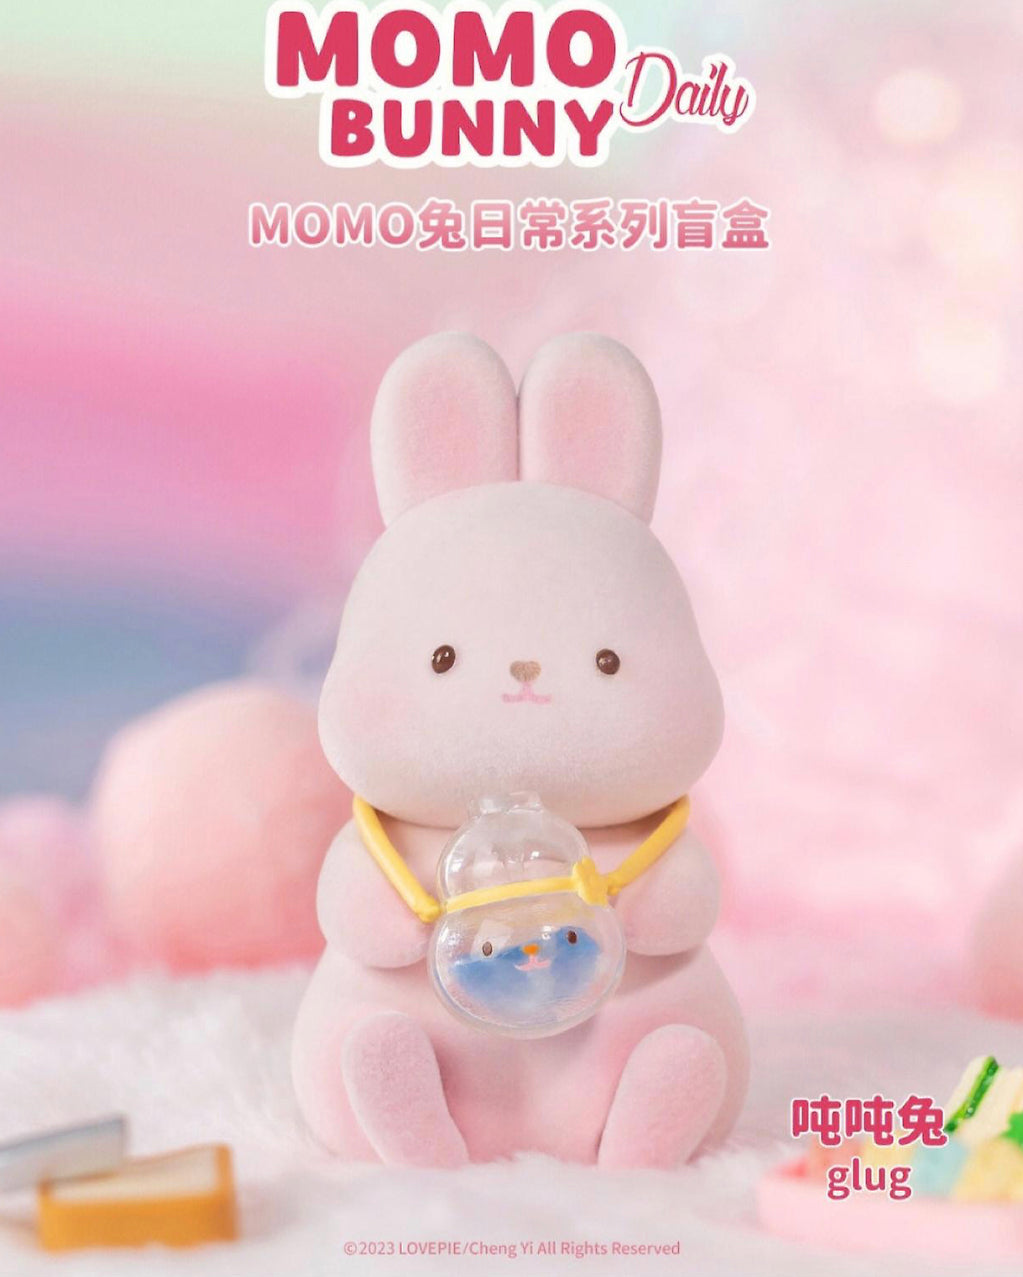 Momoko Momo Bunny Daily Series 2 Blind Box by FUNISM